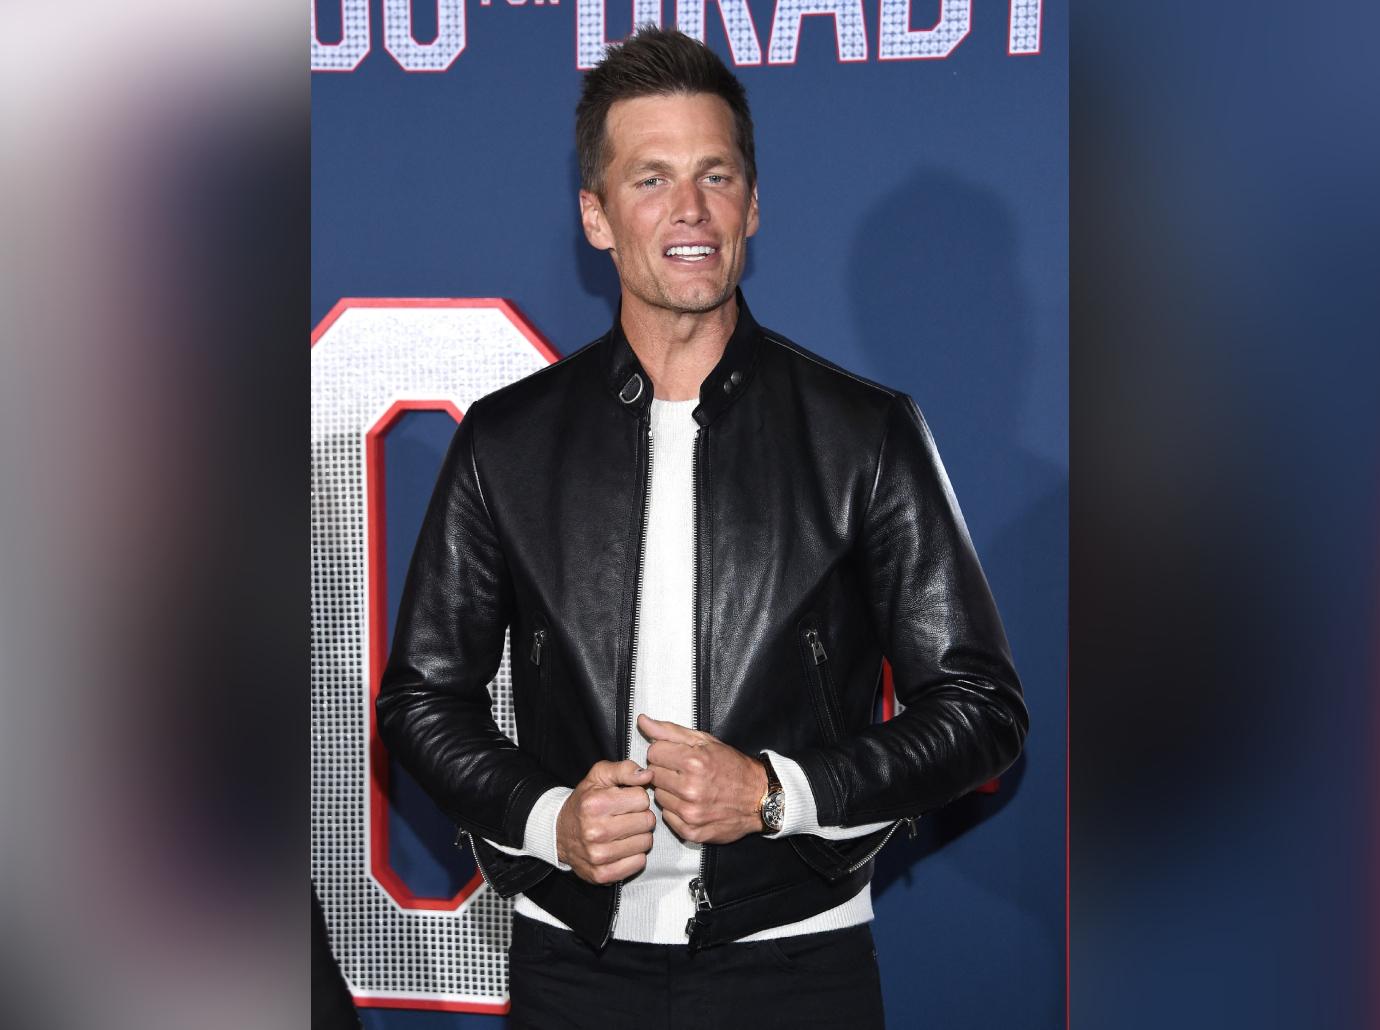 Tom Brady Attends First Red Carpet Since Gisele Bundchen Divorce: Photos